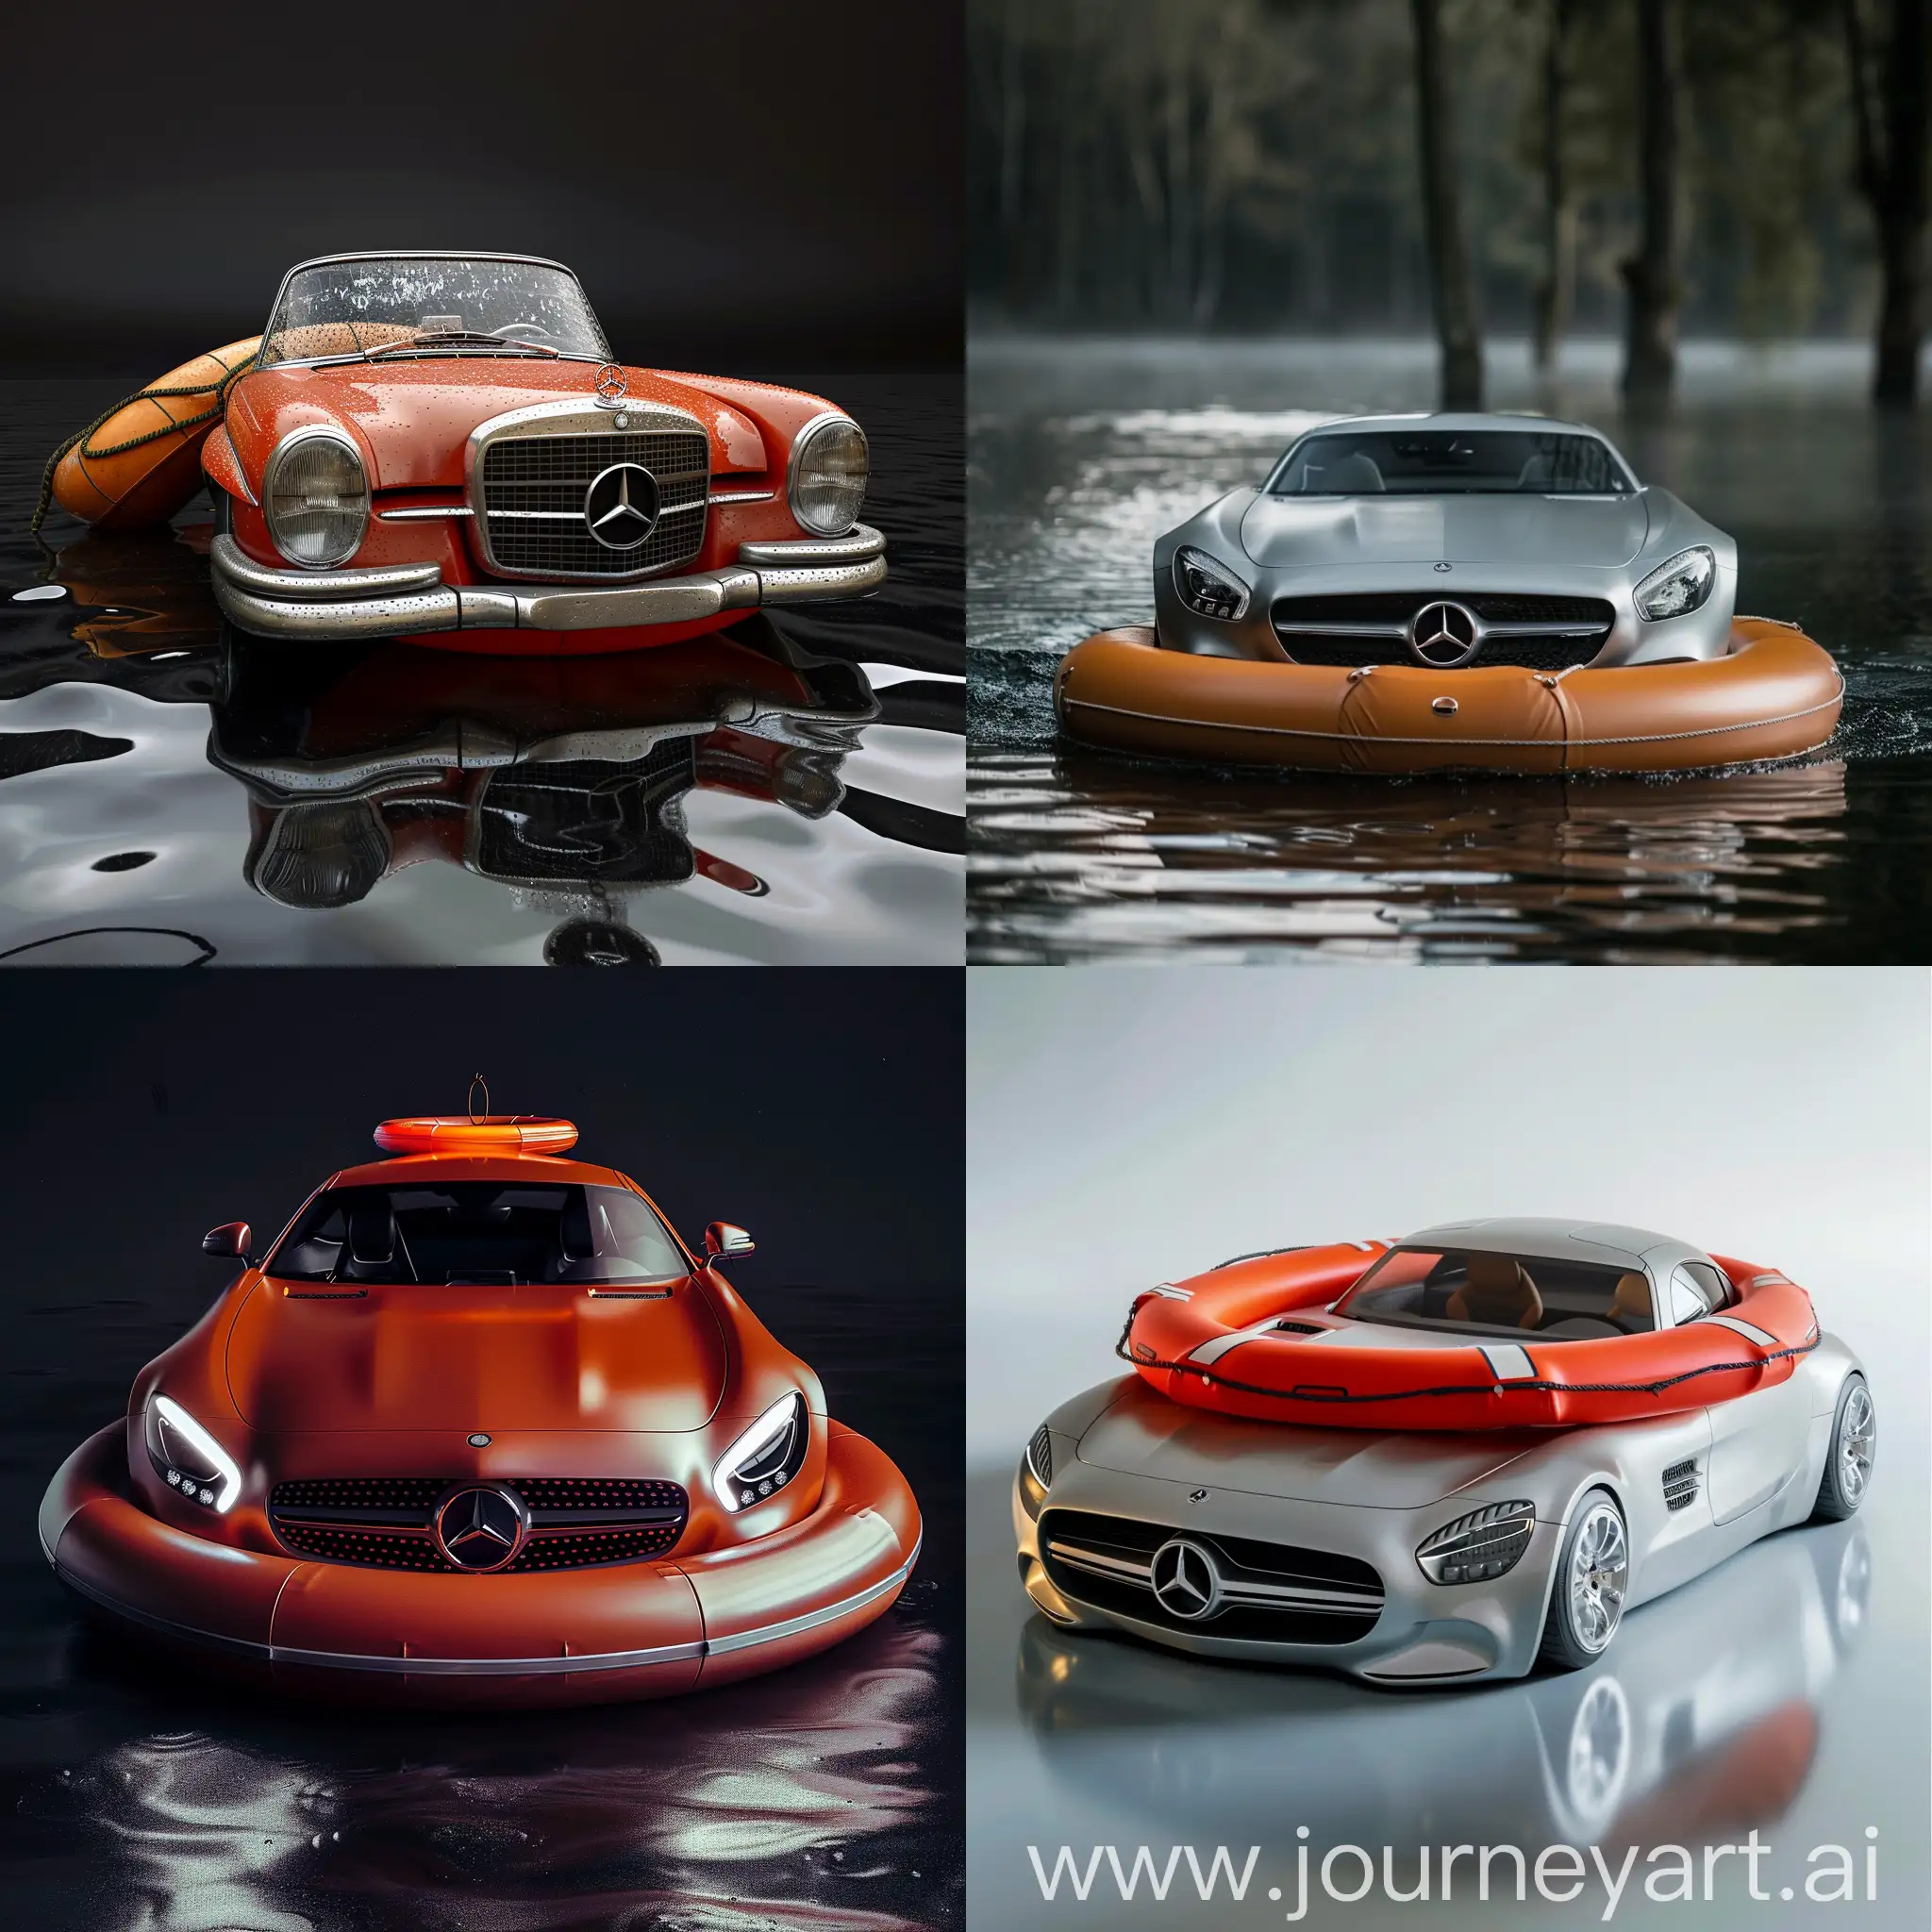 Stylish-Mercedes-Car-with-Life-Preserver-V6-Engine